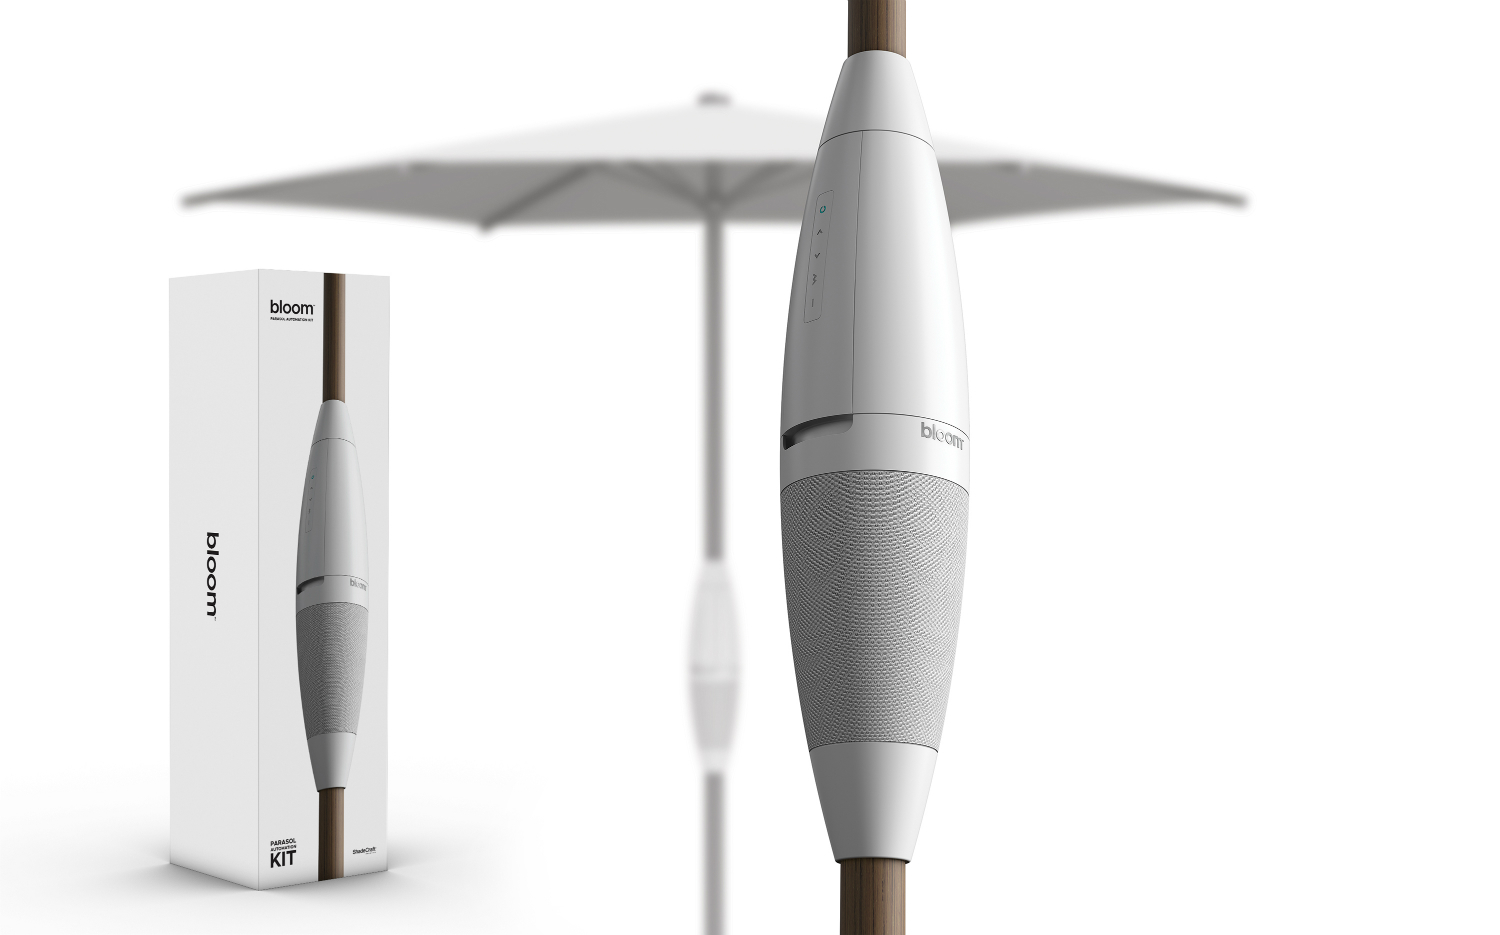 shadecrafts bloom amazon echo compatible smart umbrella shadecraft product with box